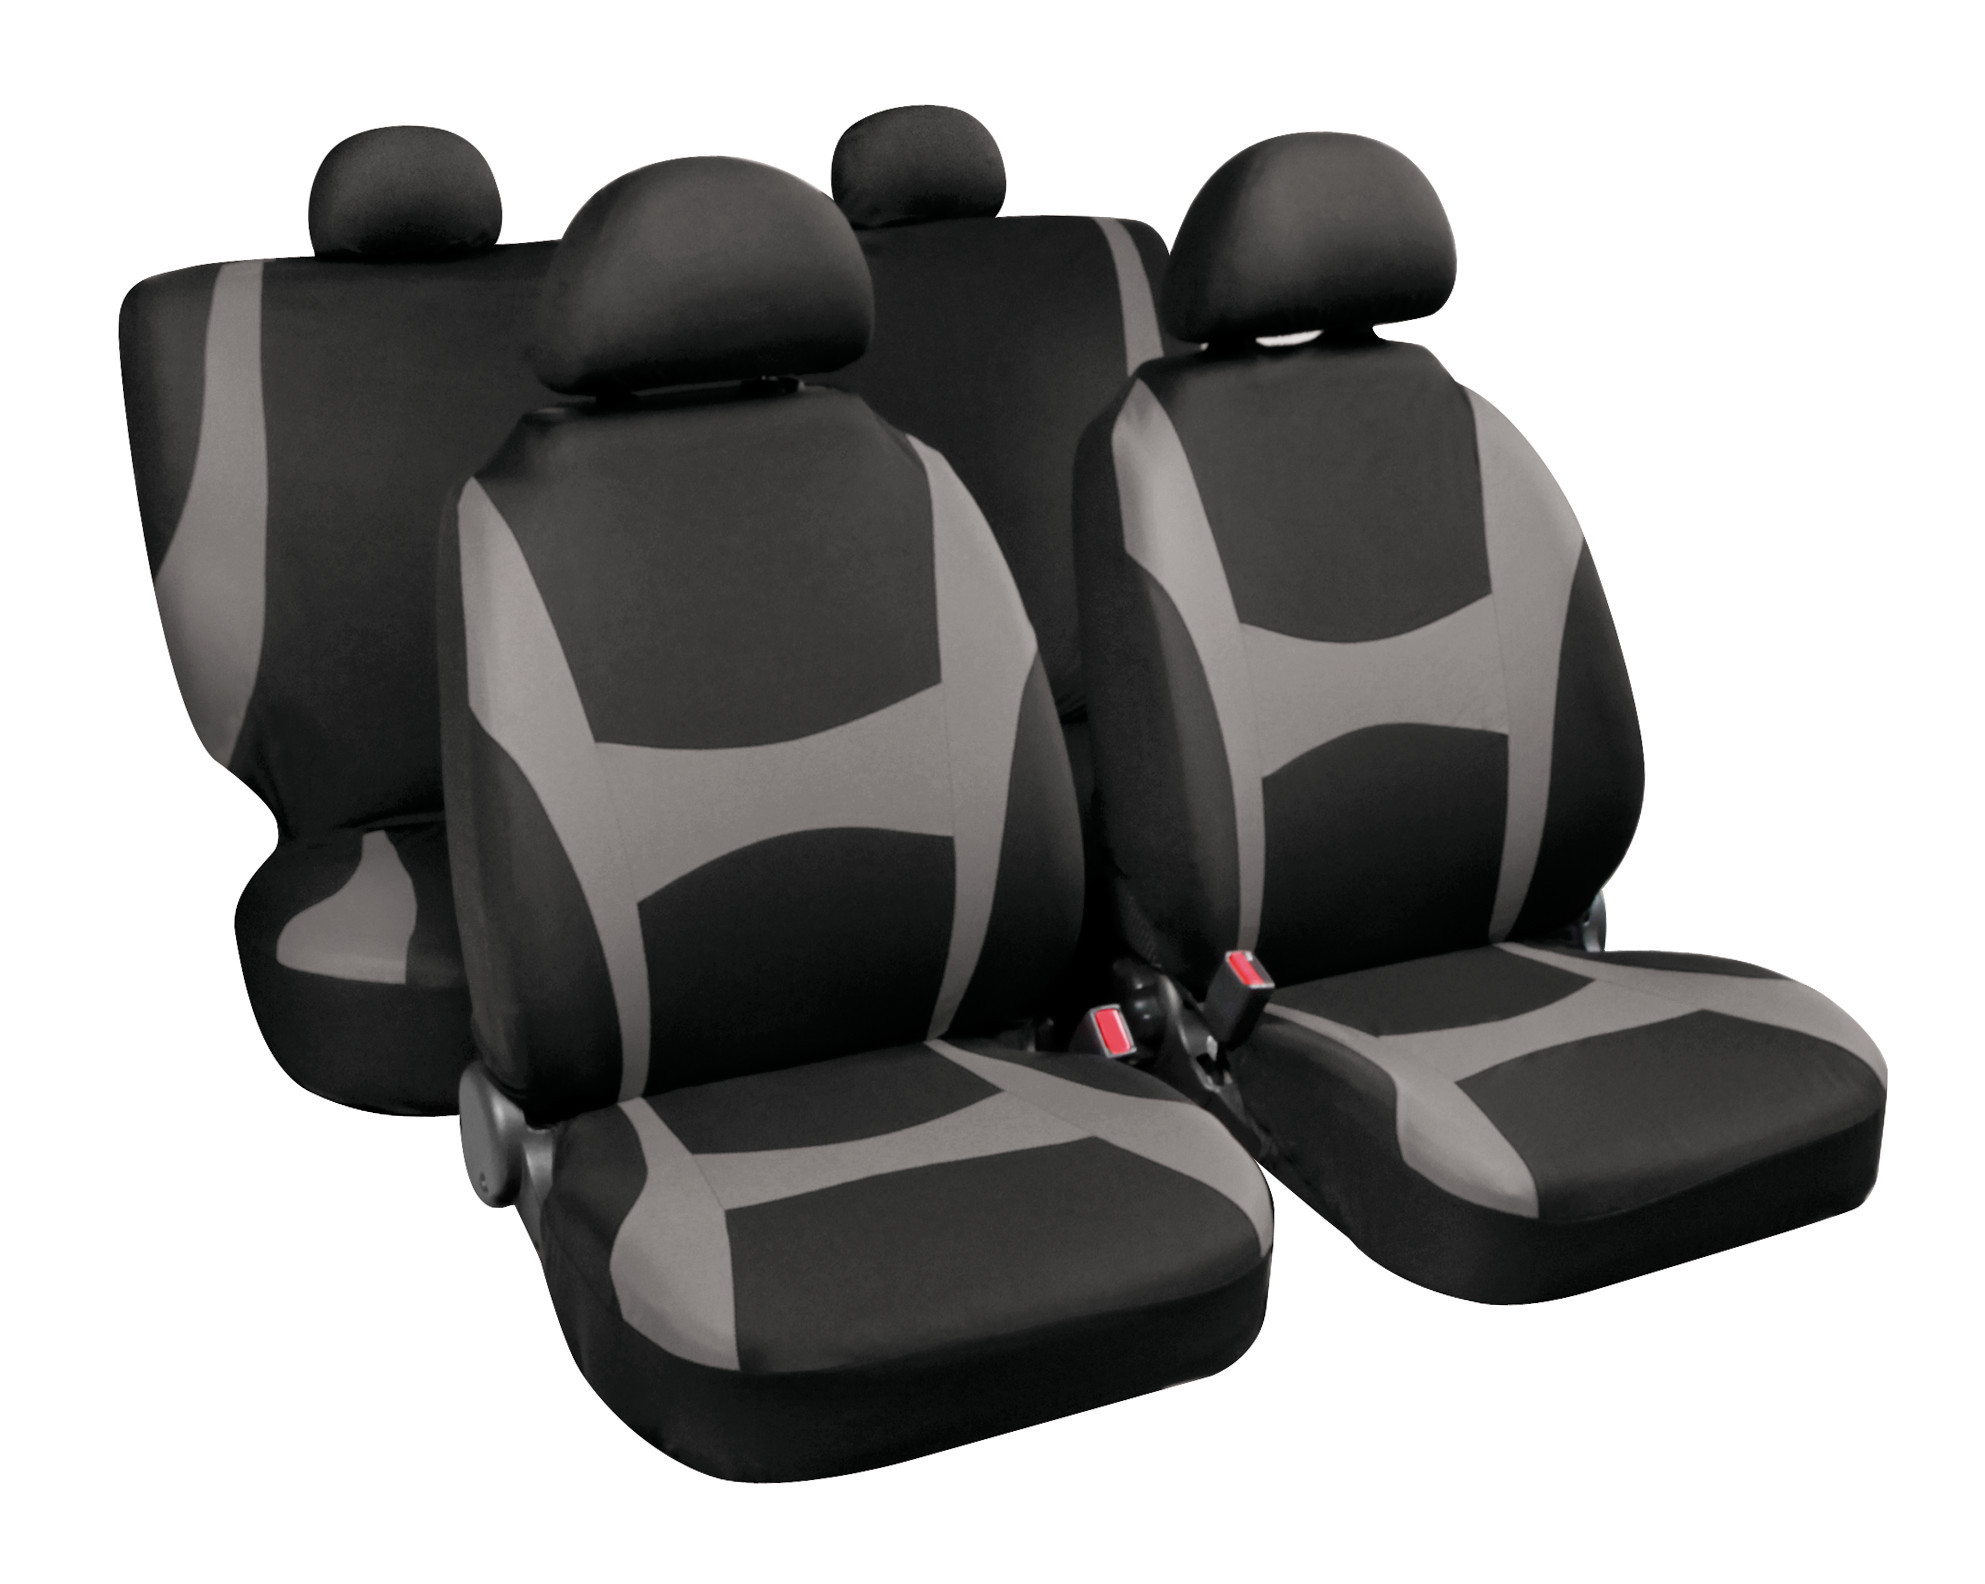 Capri stretch-fit seat covers 8pcs - Black/Grey thumb